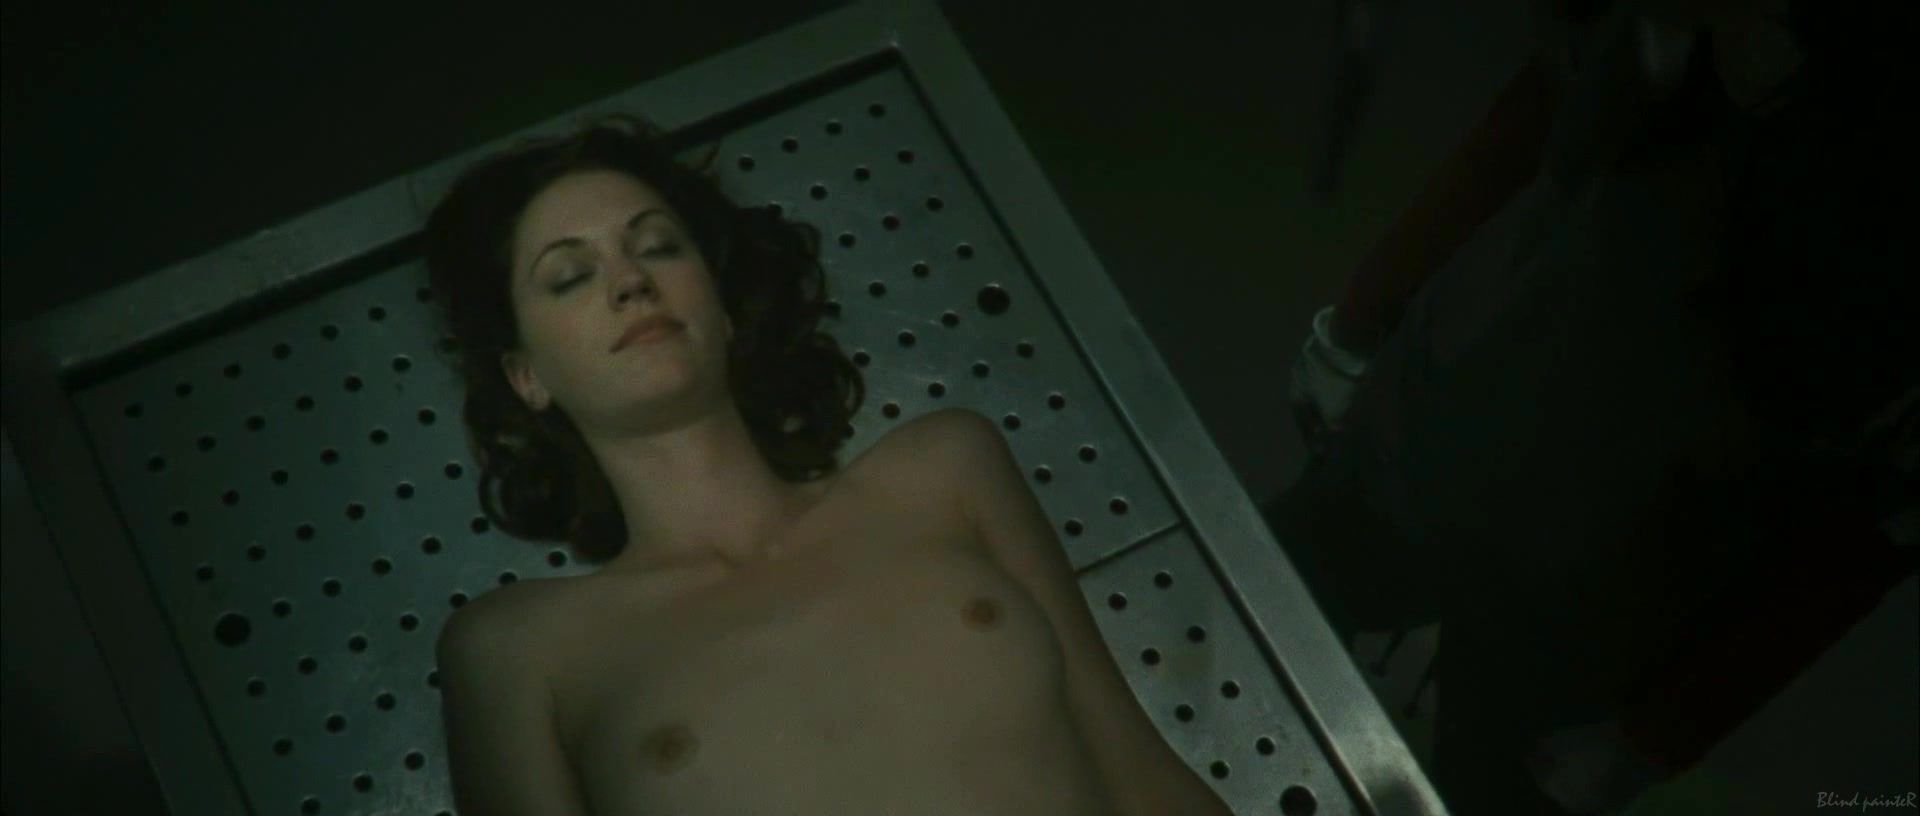 Nice Sex video Lauren Lee Smith nude - Pathology (2008) Parody - 1